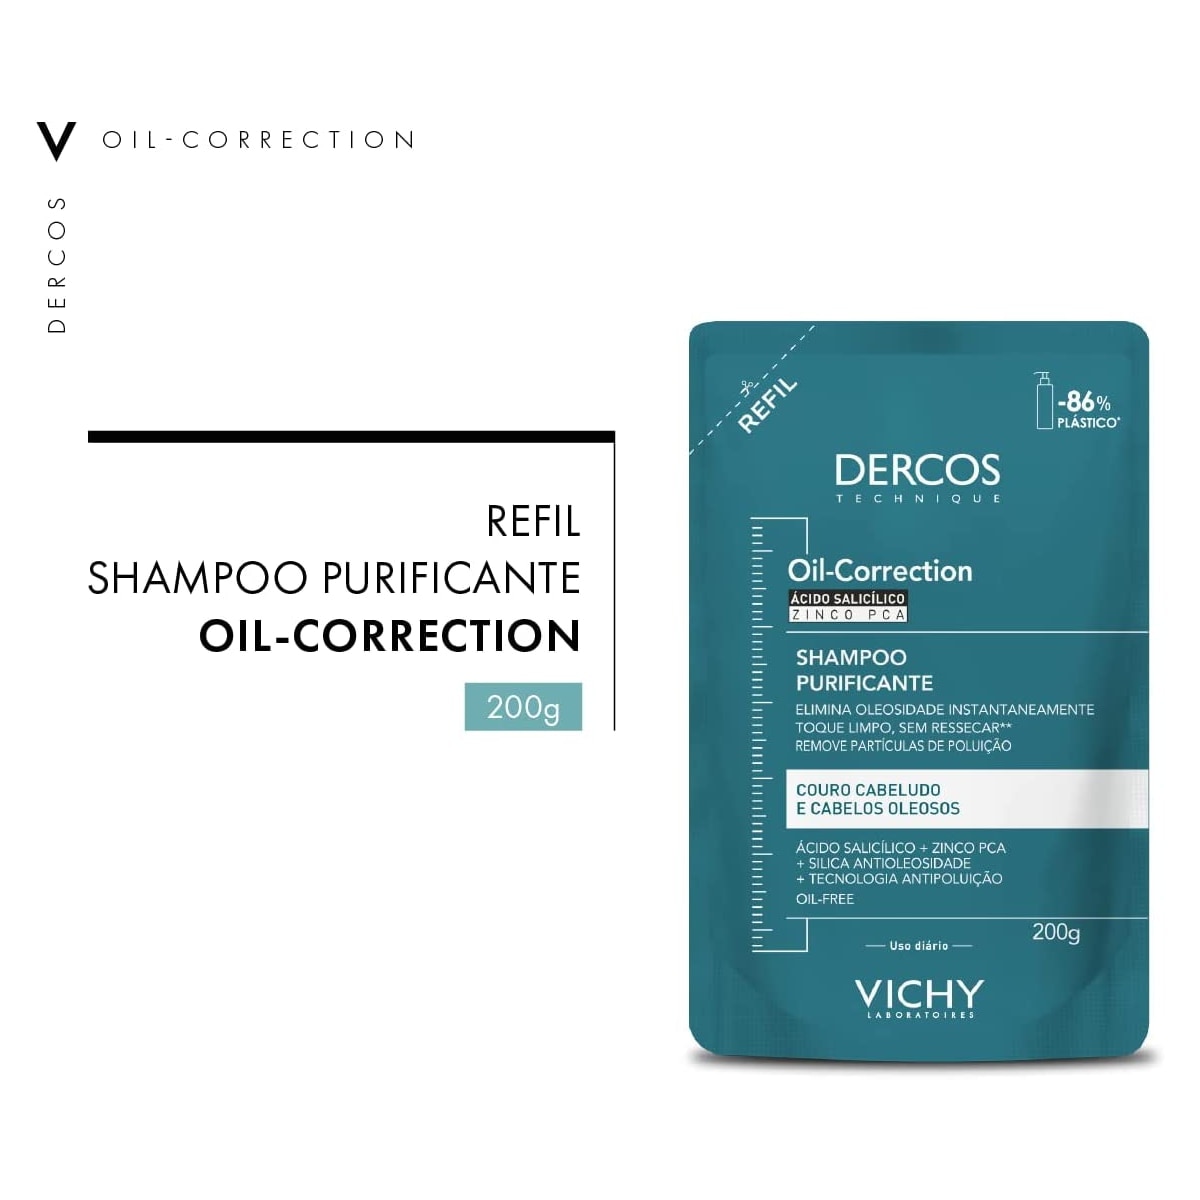 Refil Shampoo Dercos Vichy Oil-Correction 200g